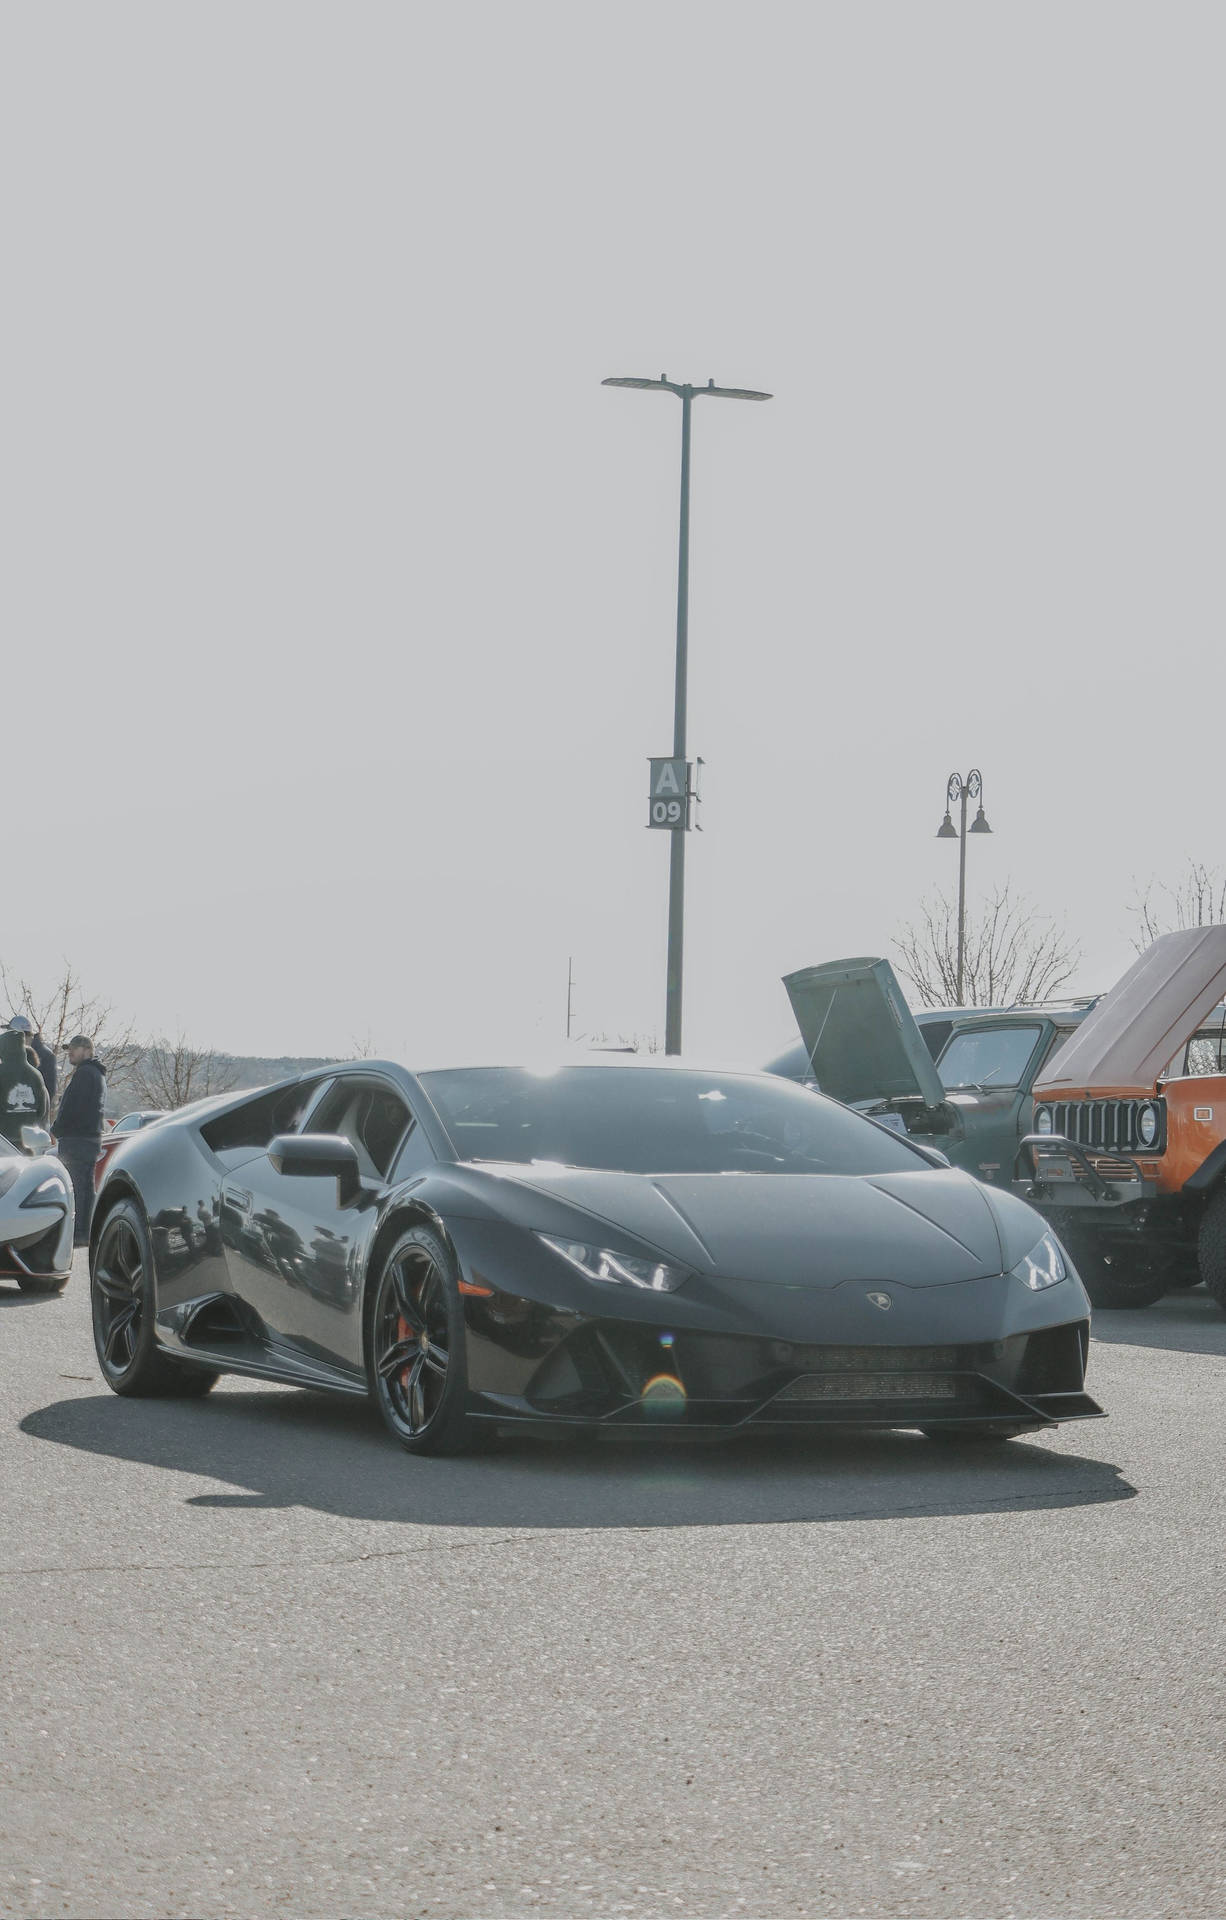 A Black Lamborghini Gt4 Parked In A Parking Lot Wallpaper